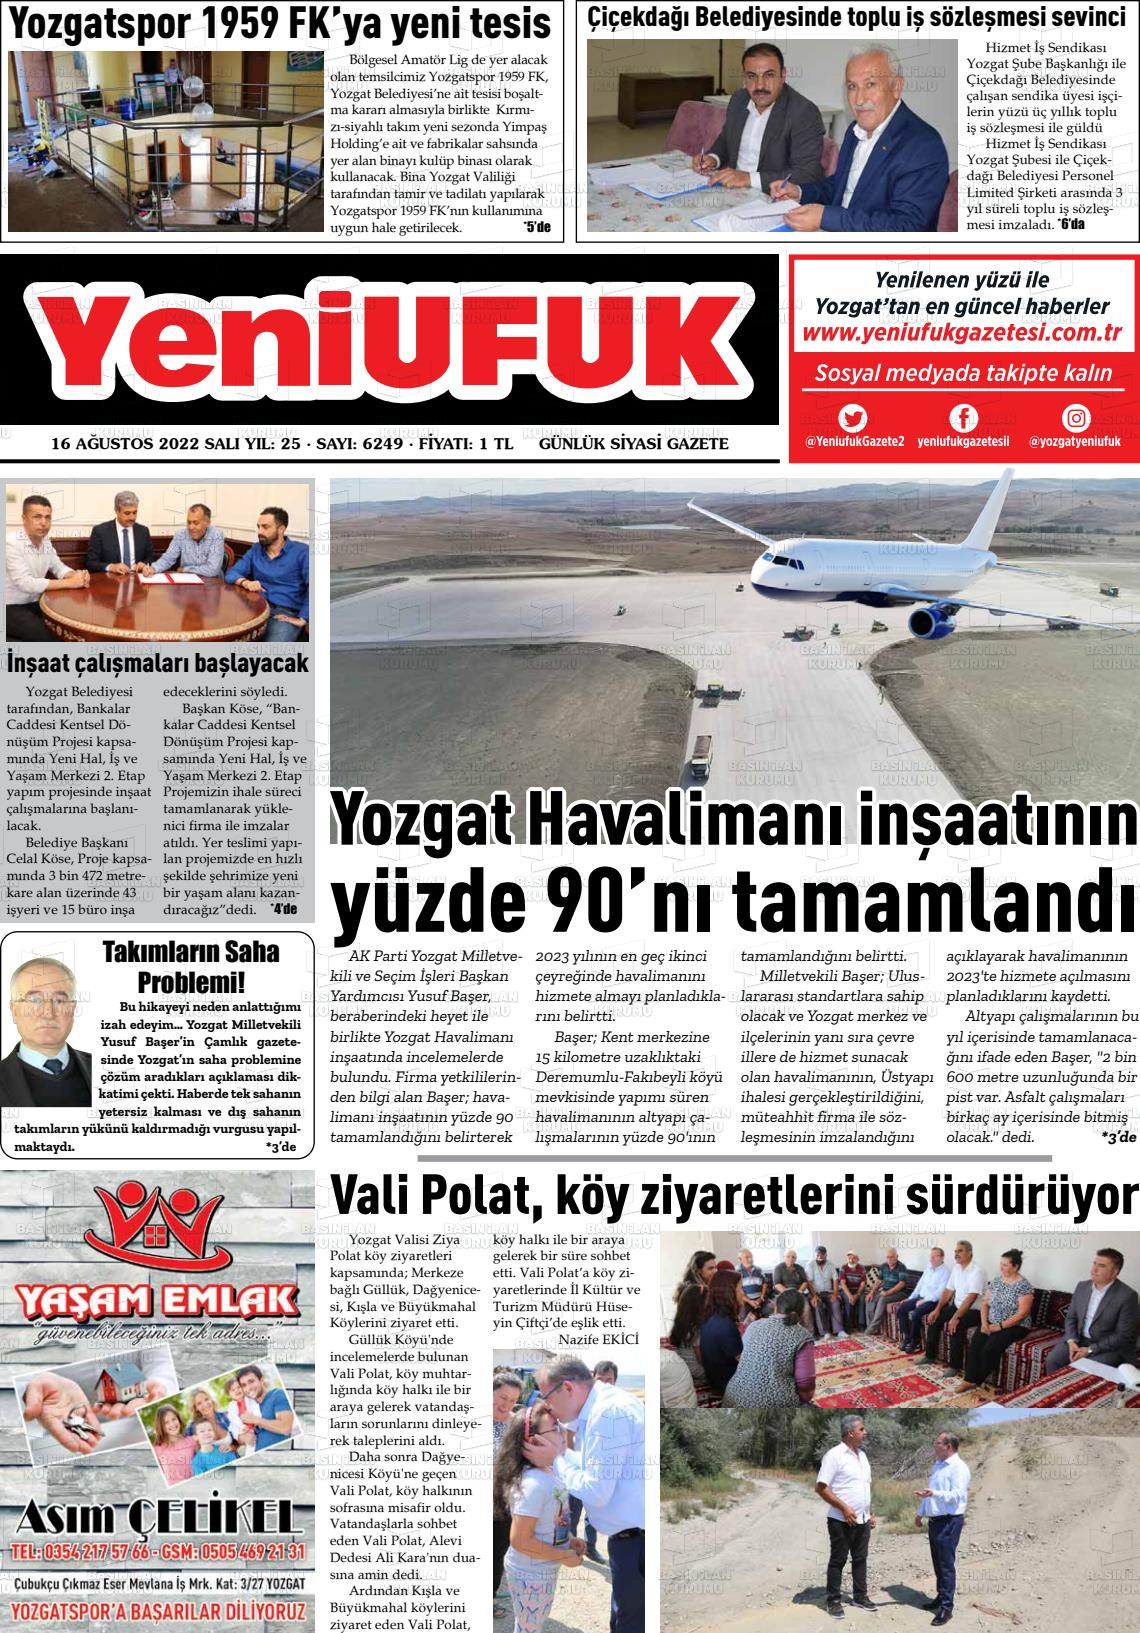 16 Ağustos 2022 Yozgat Yeni Ufuk Gazete Manşeti